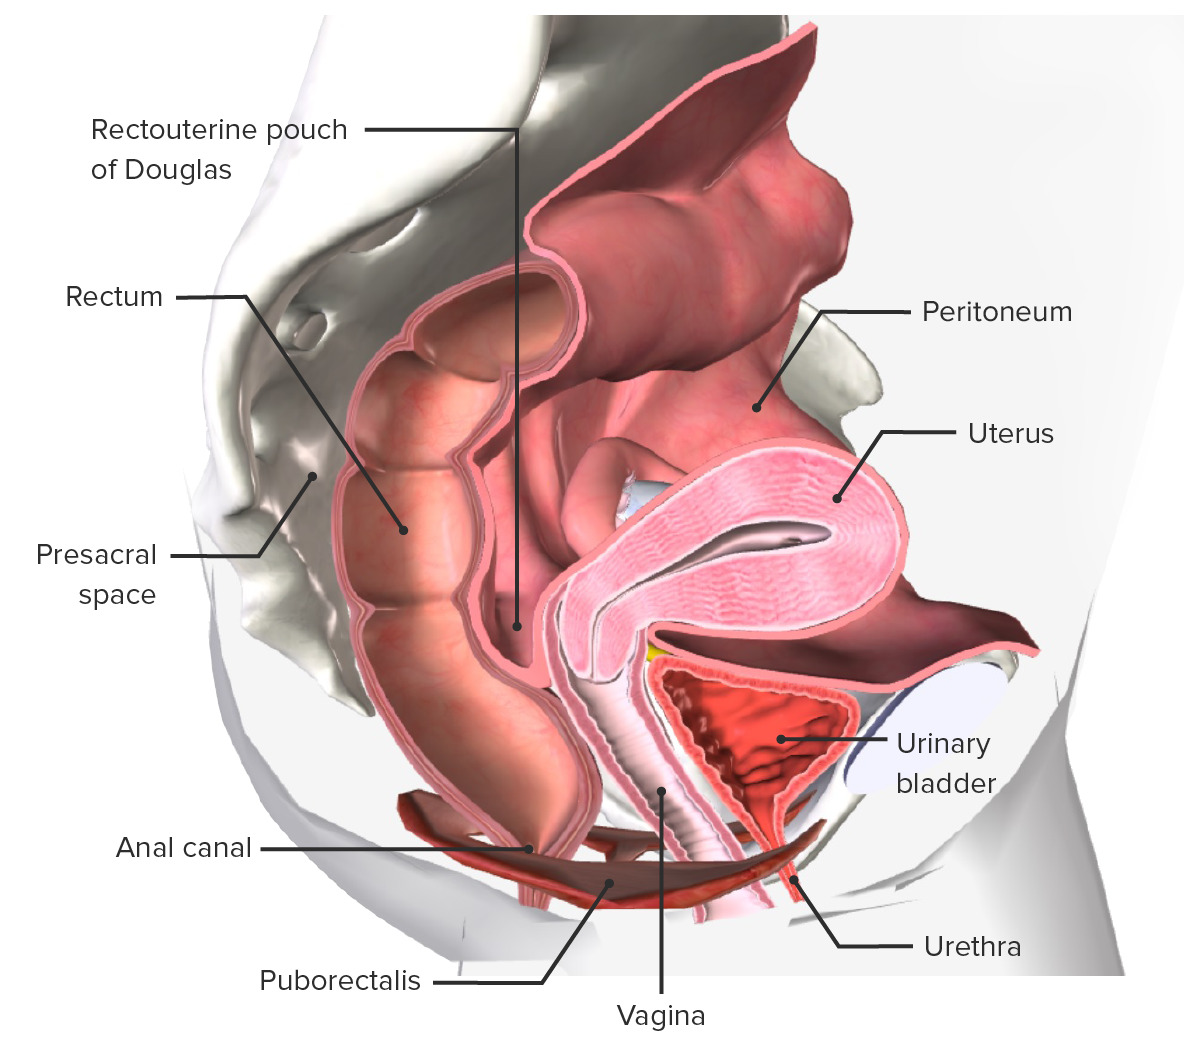 Anatomy of the internal female pelvis